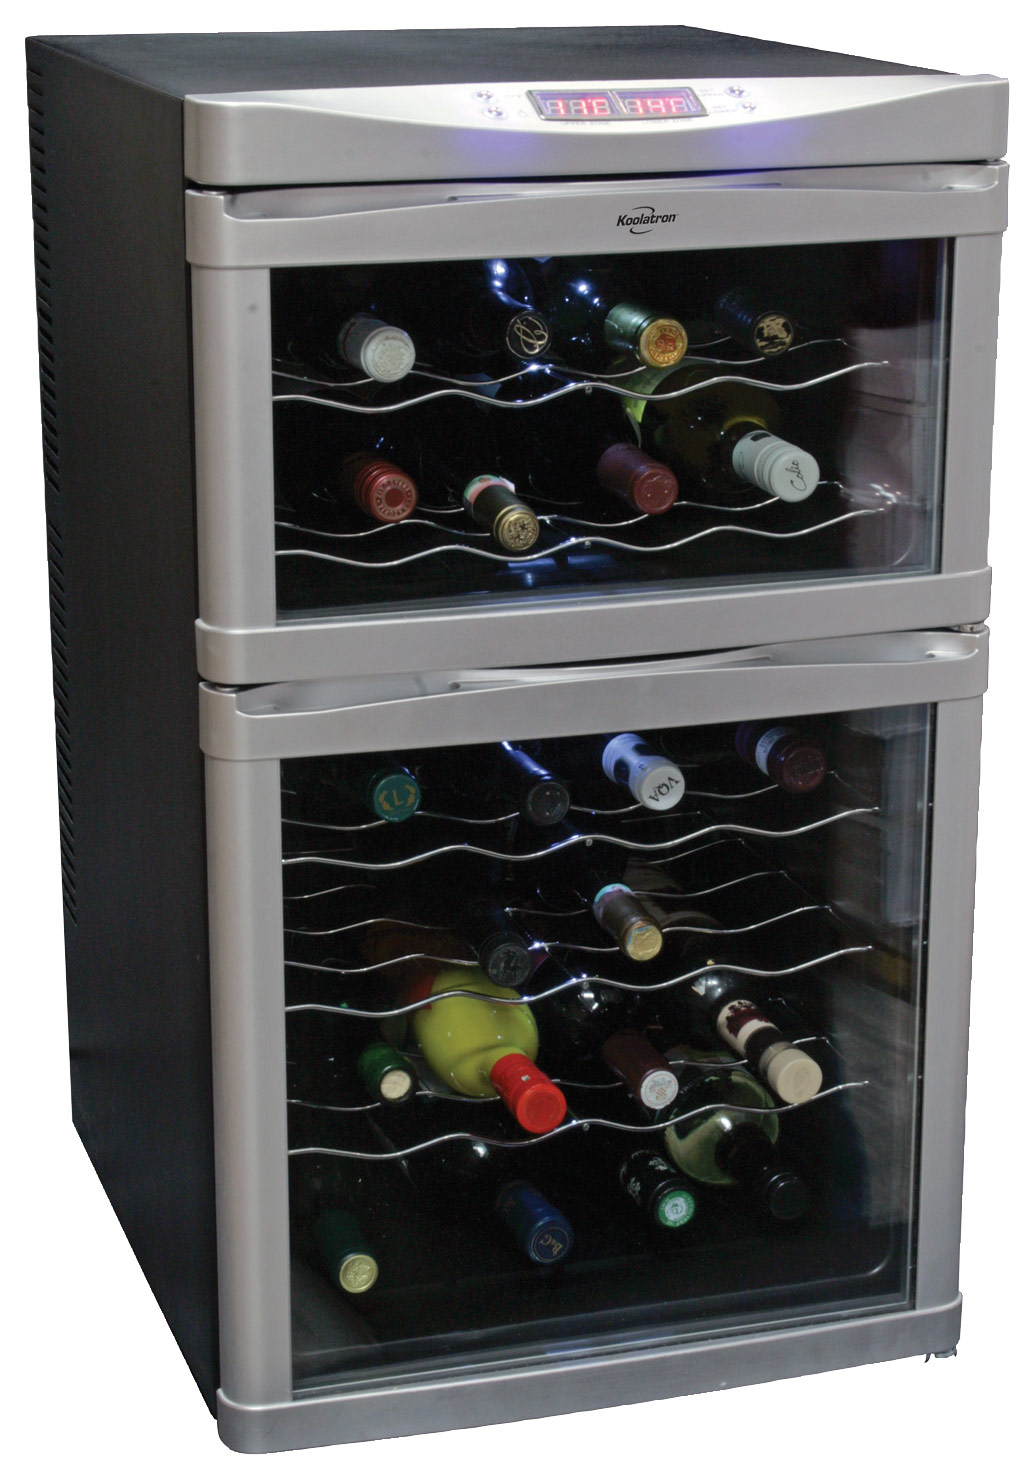 34+ Koolatron wine fridge parts information